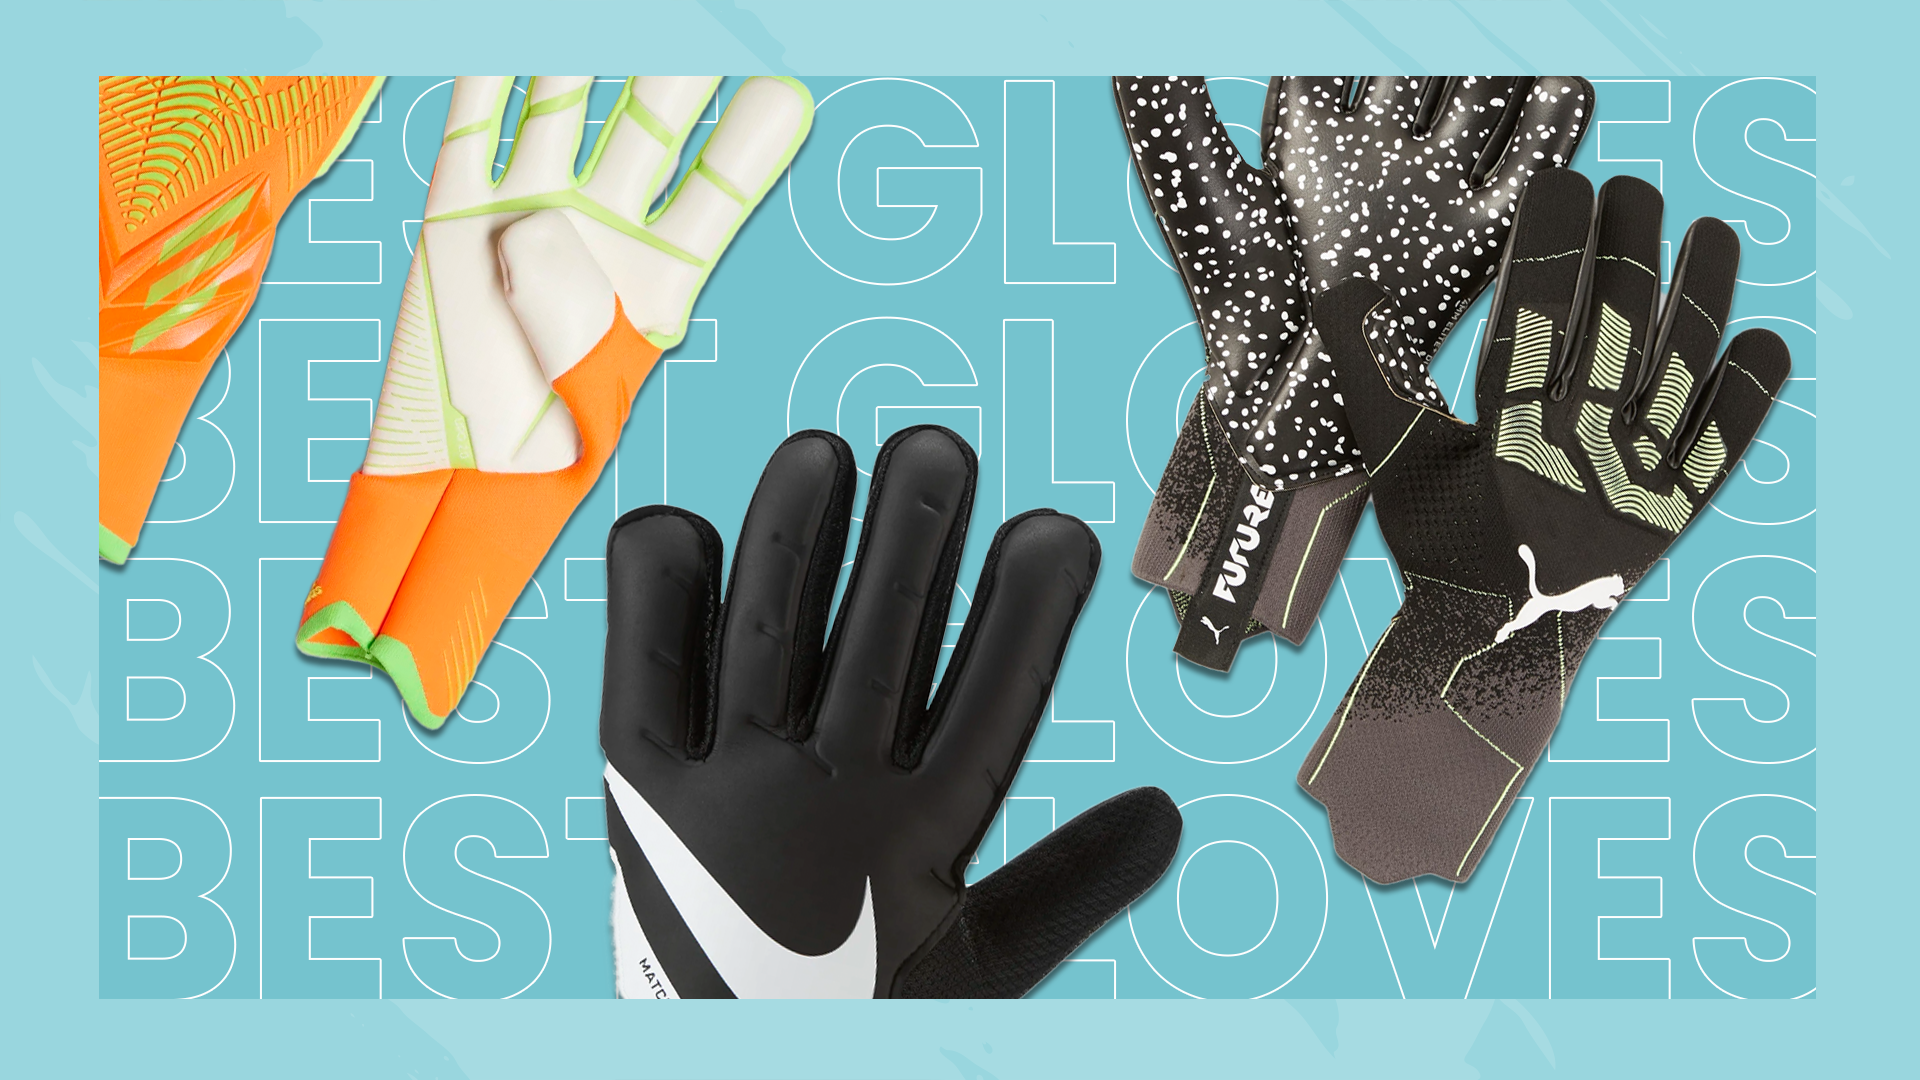  Goalkeeper Gloves and Goalkeeper Equipment